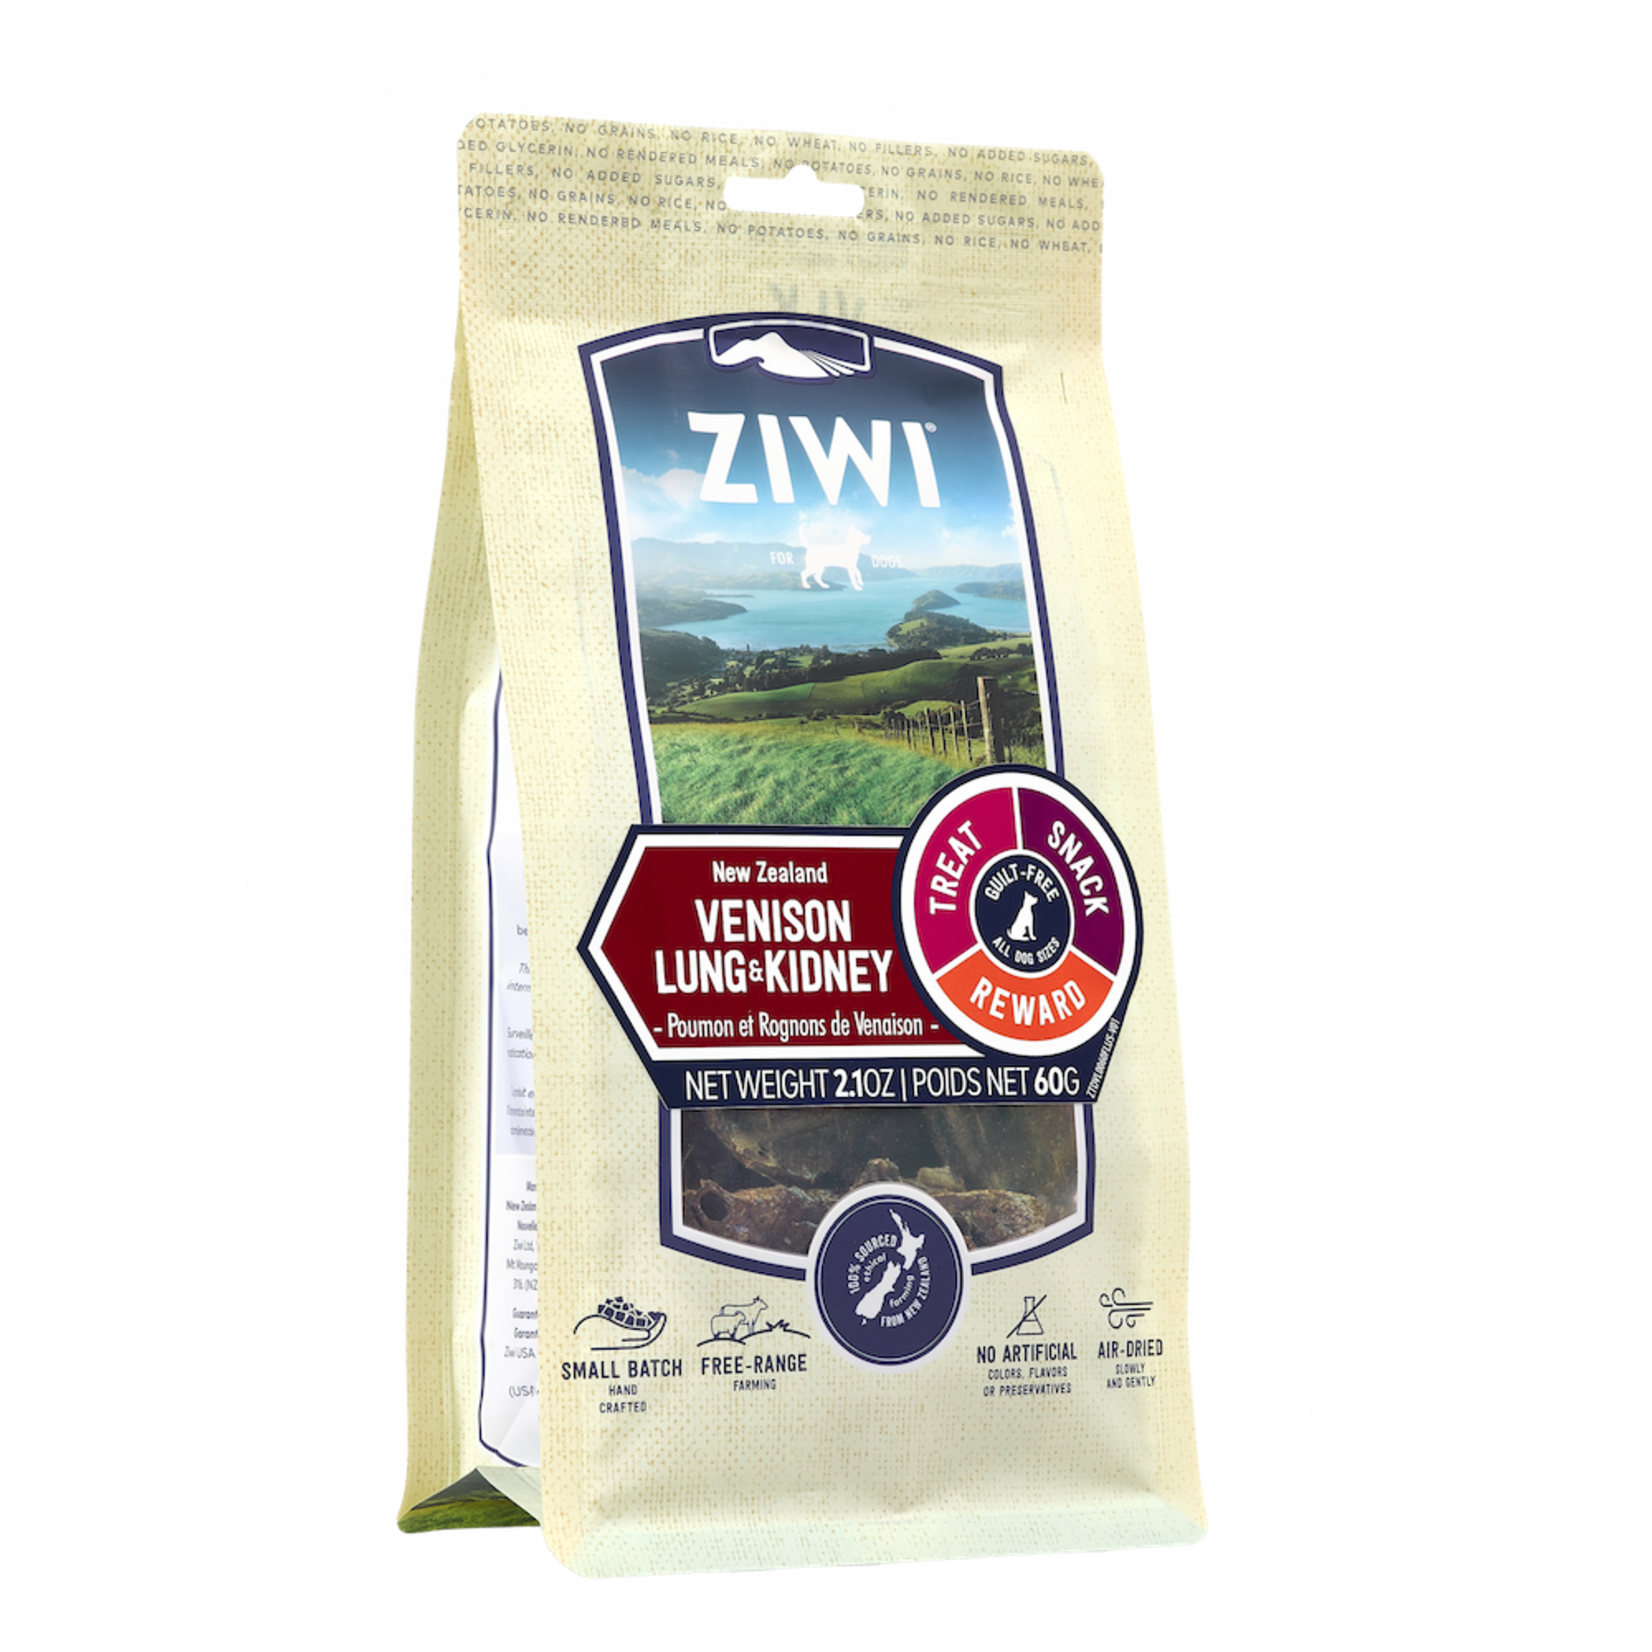 ZIWI Pets Ziwi Peak New Zealand Venison Lung & Kidney